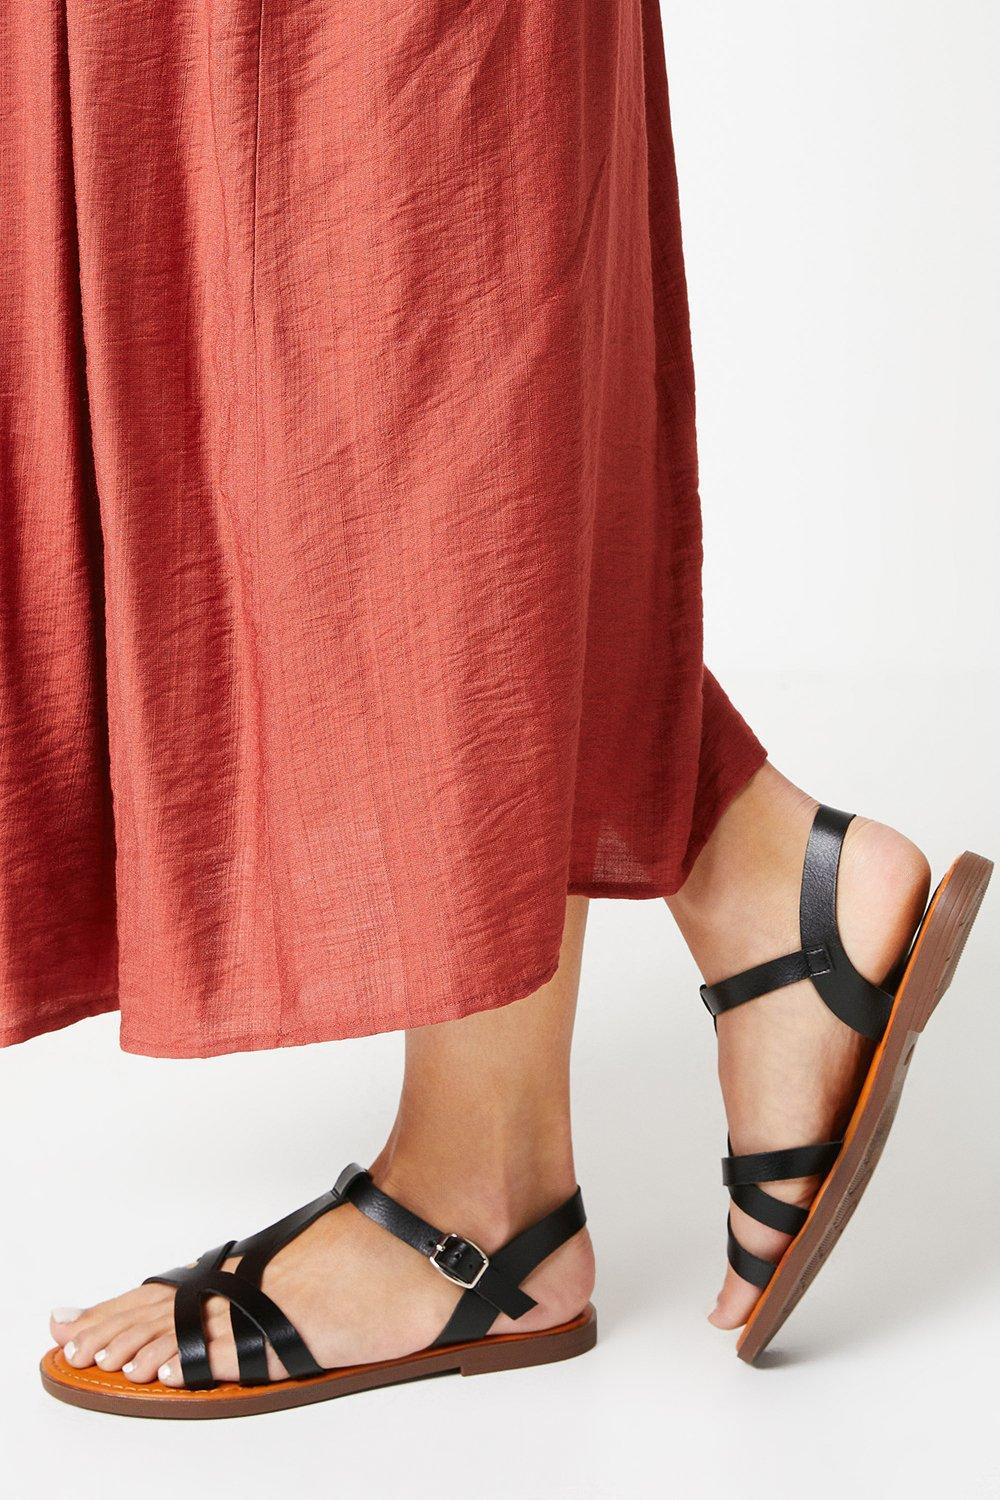 Womens Good For The Sole: Megan Flexi Sole Flat Sandals